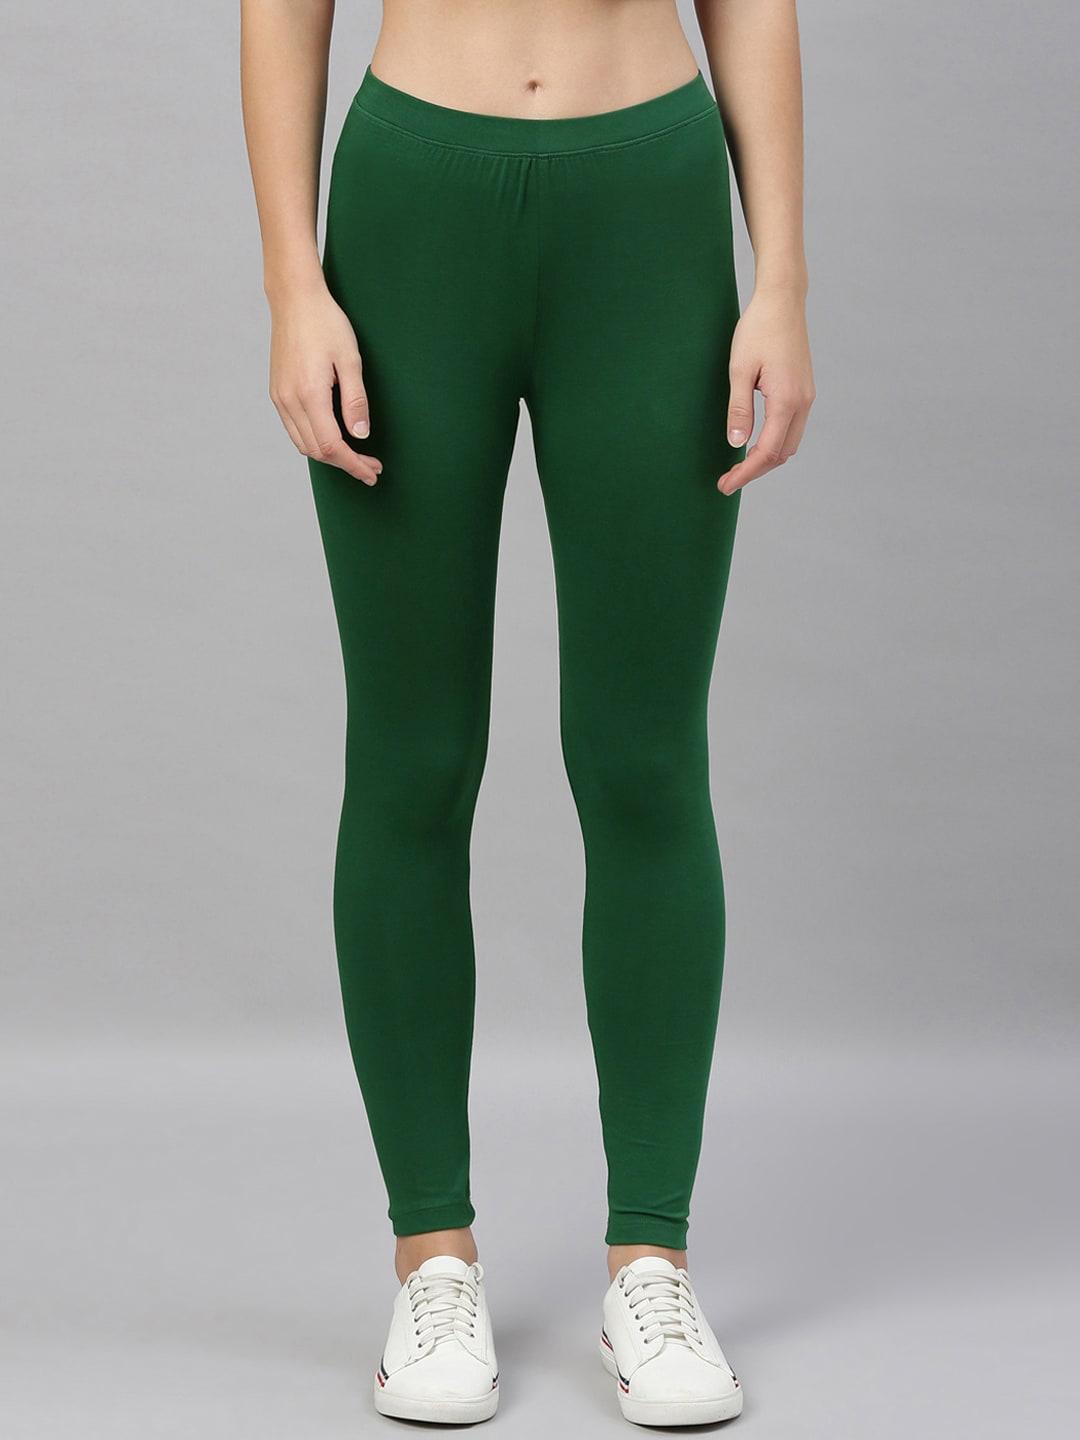 kryptic-women-green-solid-ankle-length-leggings